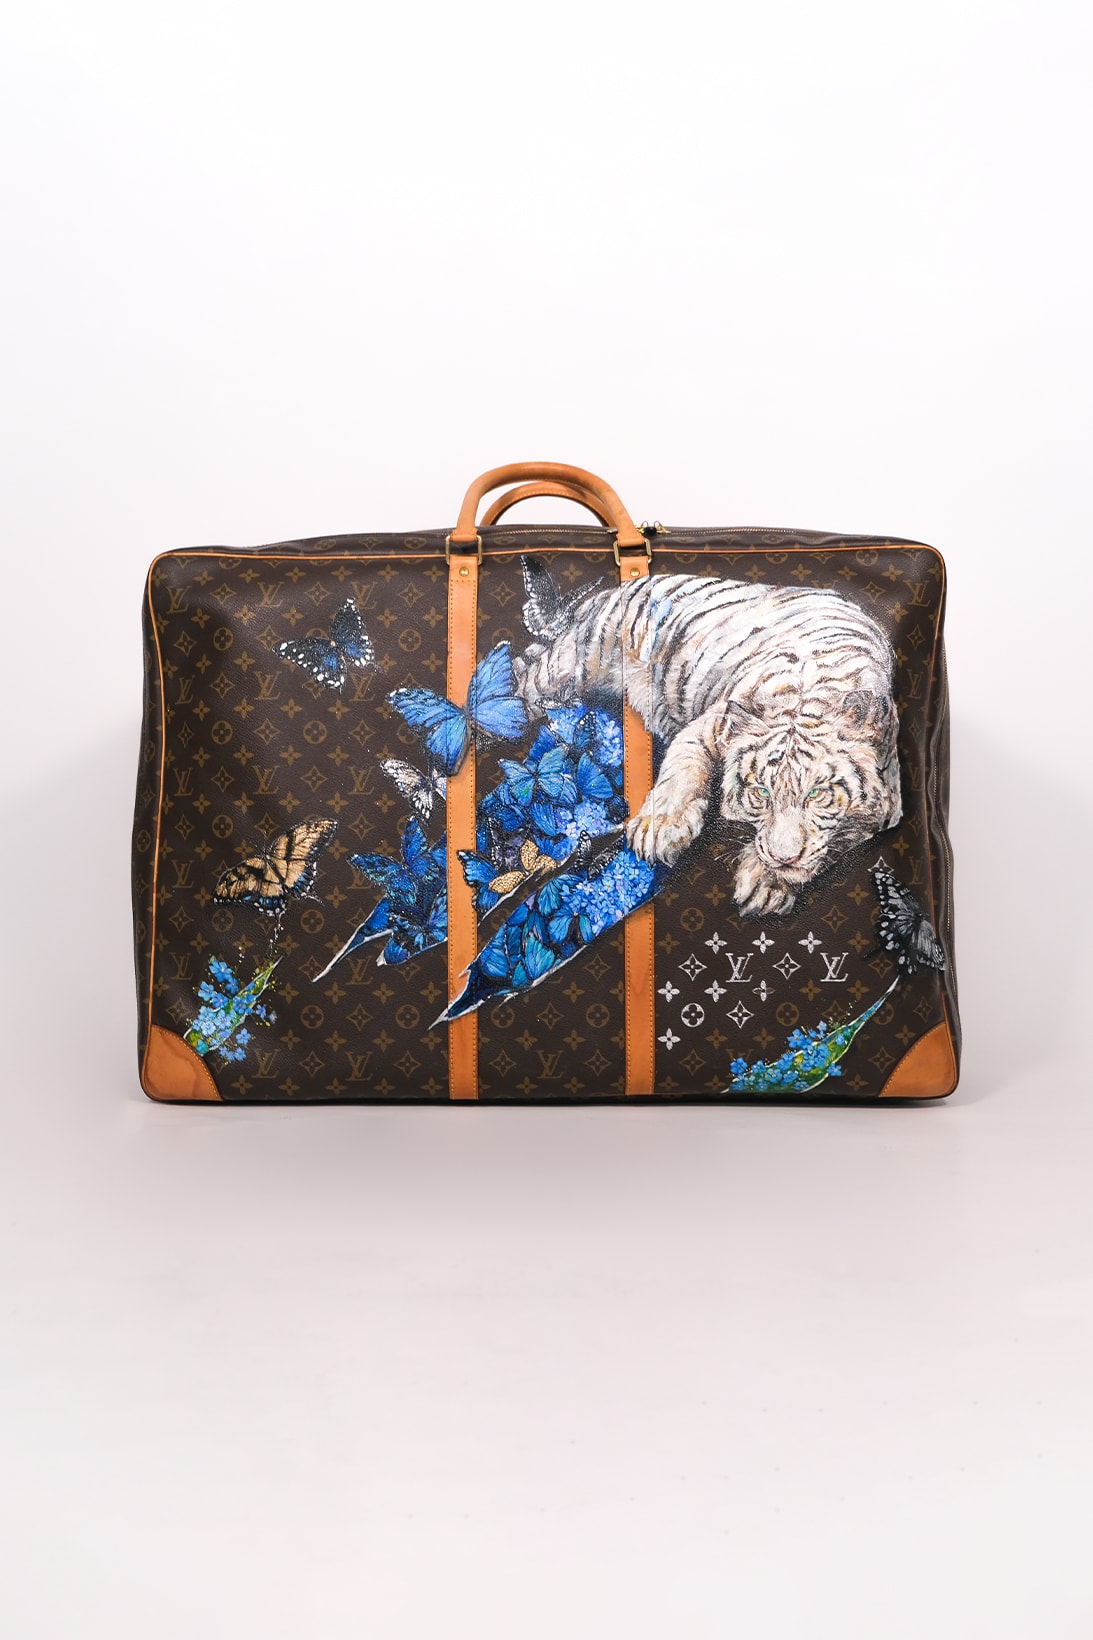 Wear Earthero Art Exhibition Louis Vuitton Luggage Bag Fashion Sustainability Showcase Info